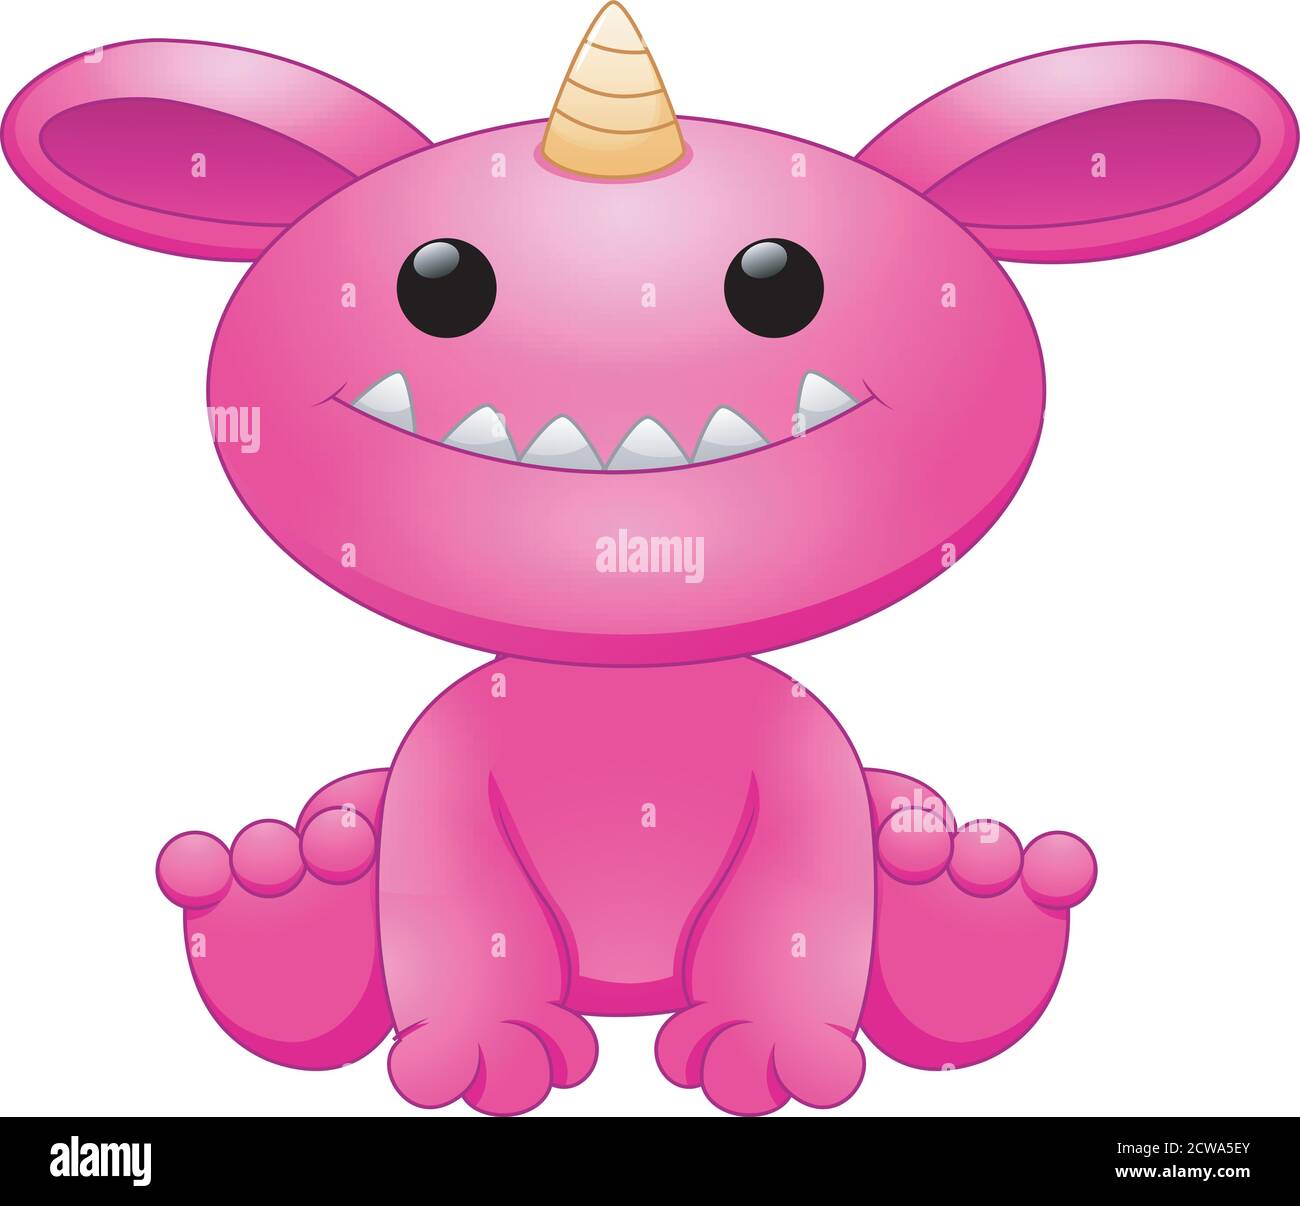 Vector illustration of Cute pink monster cartoon Stock Vector